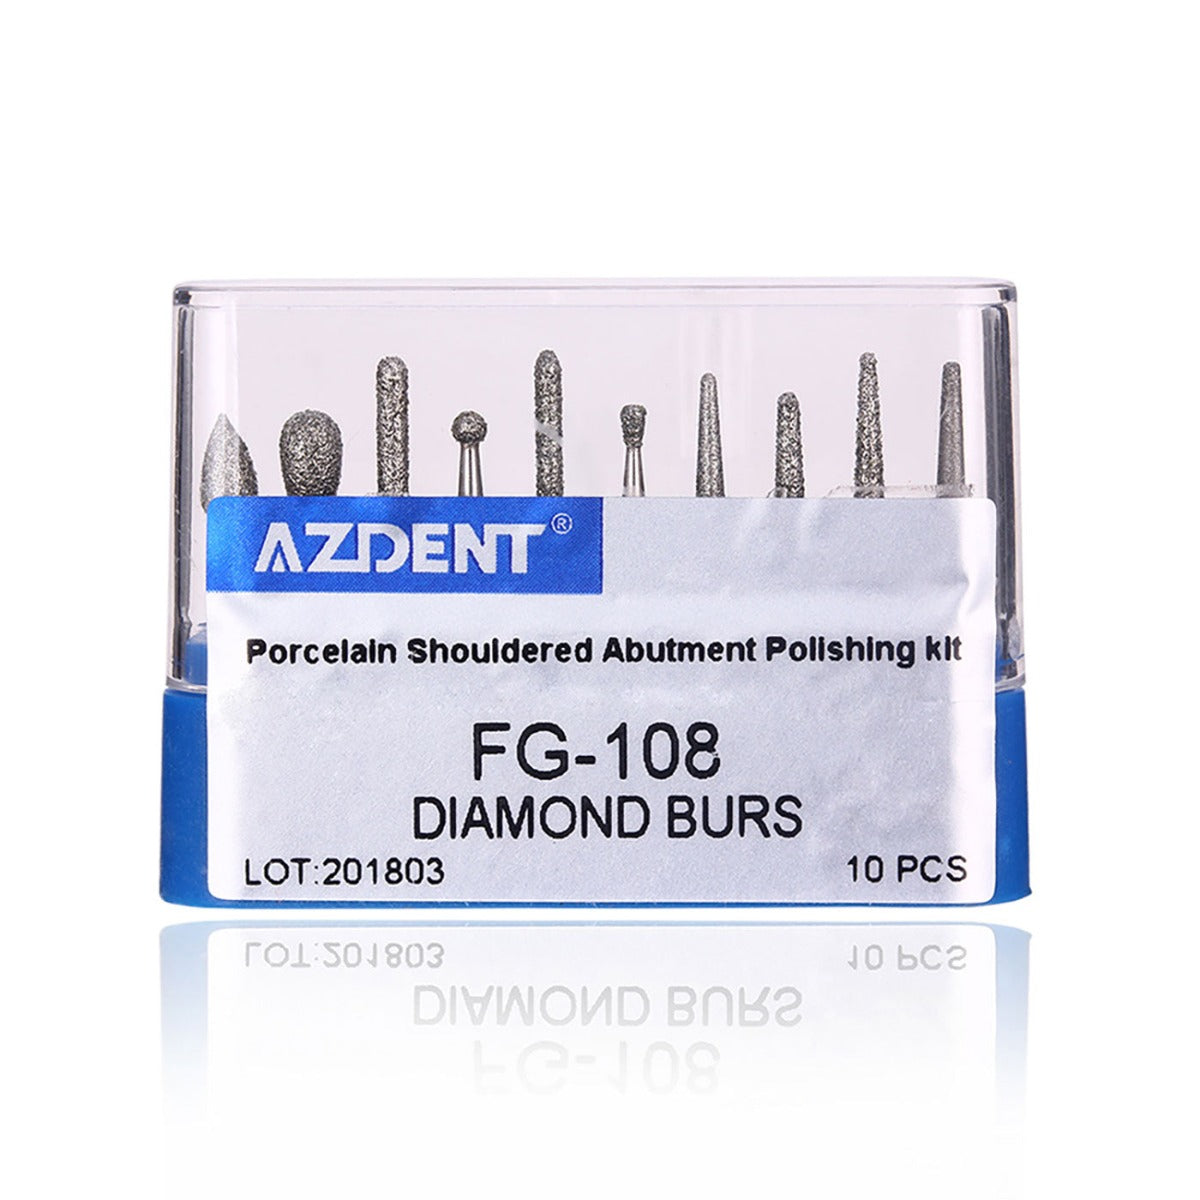 Dental Diamond Bur FG-108 Porcelain Shouldered Abutment Polishing Kit 10pcs/Kit - pairaydental.com